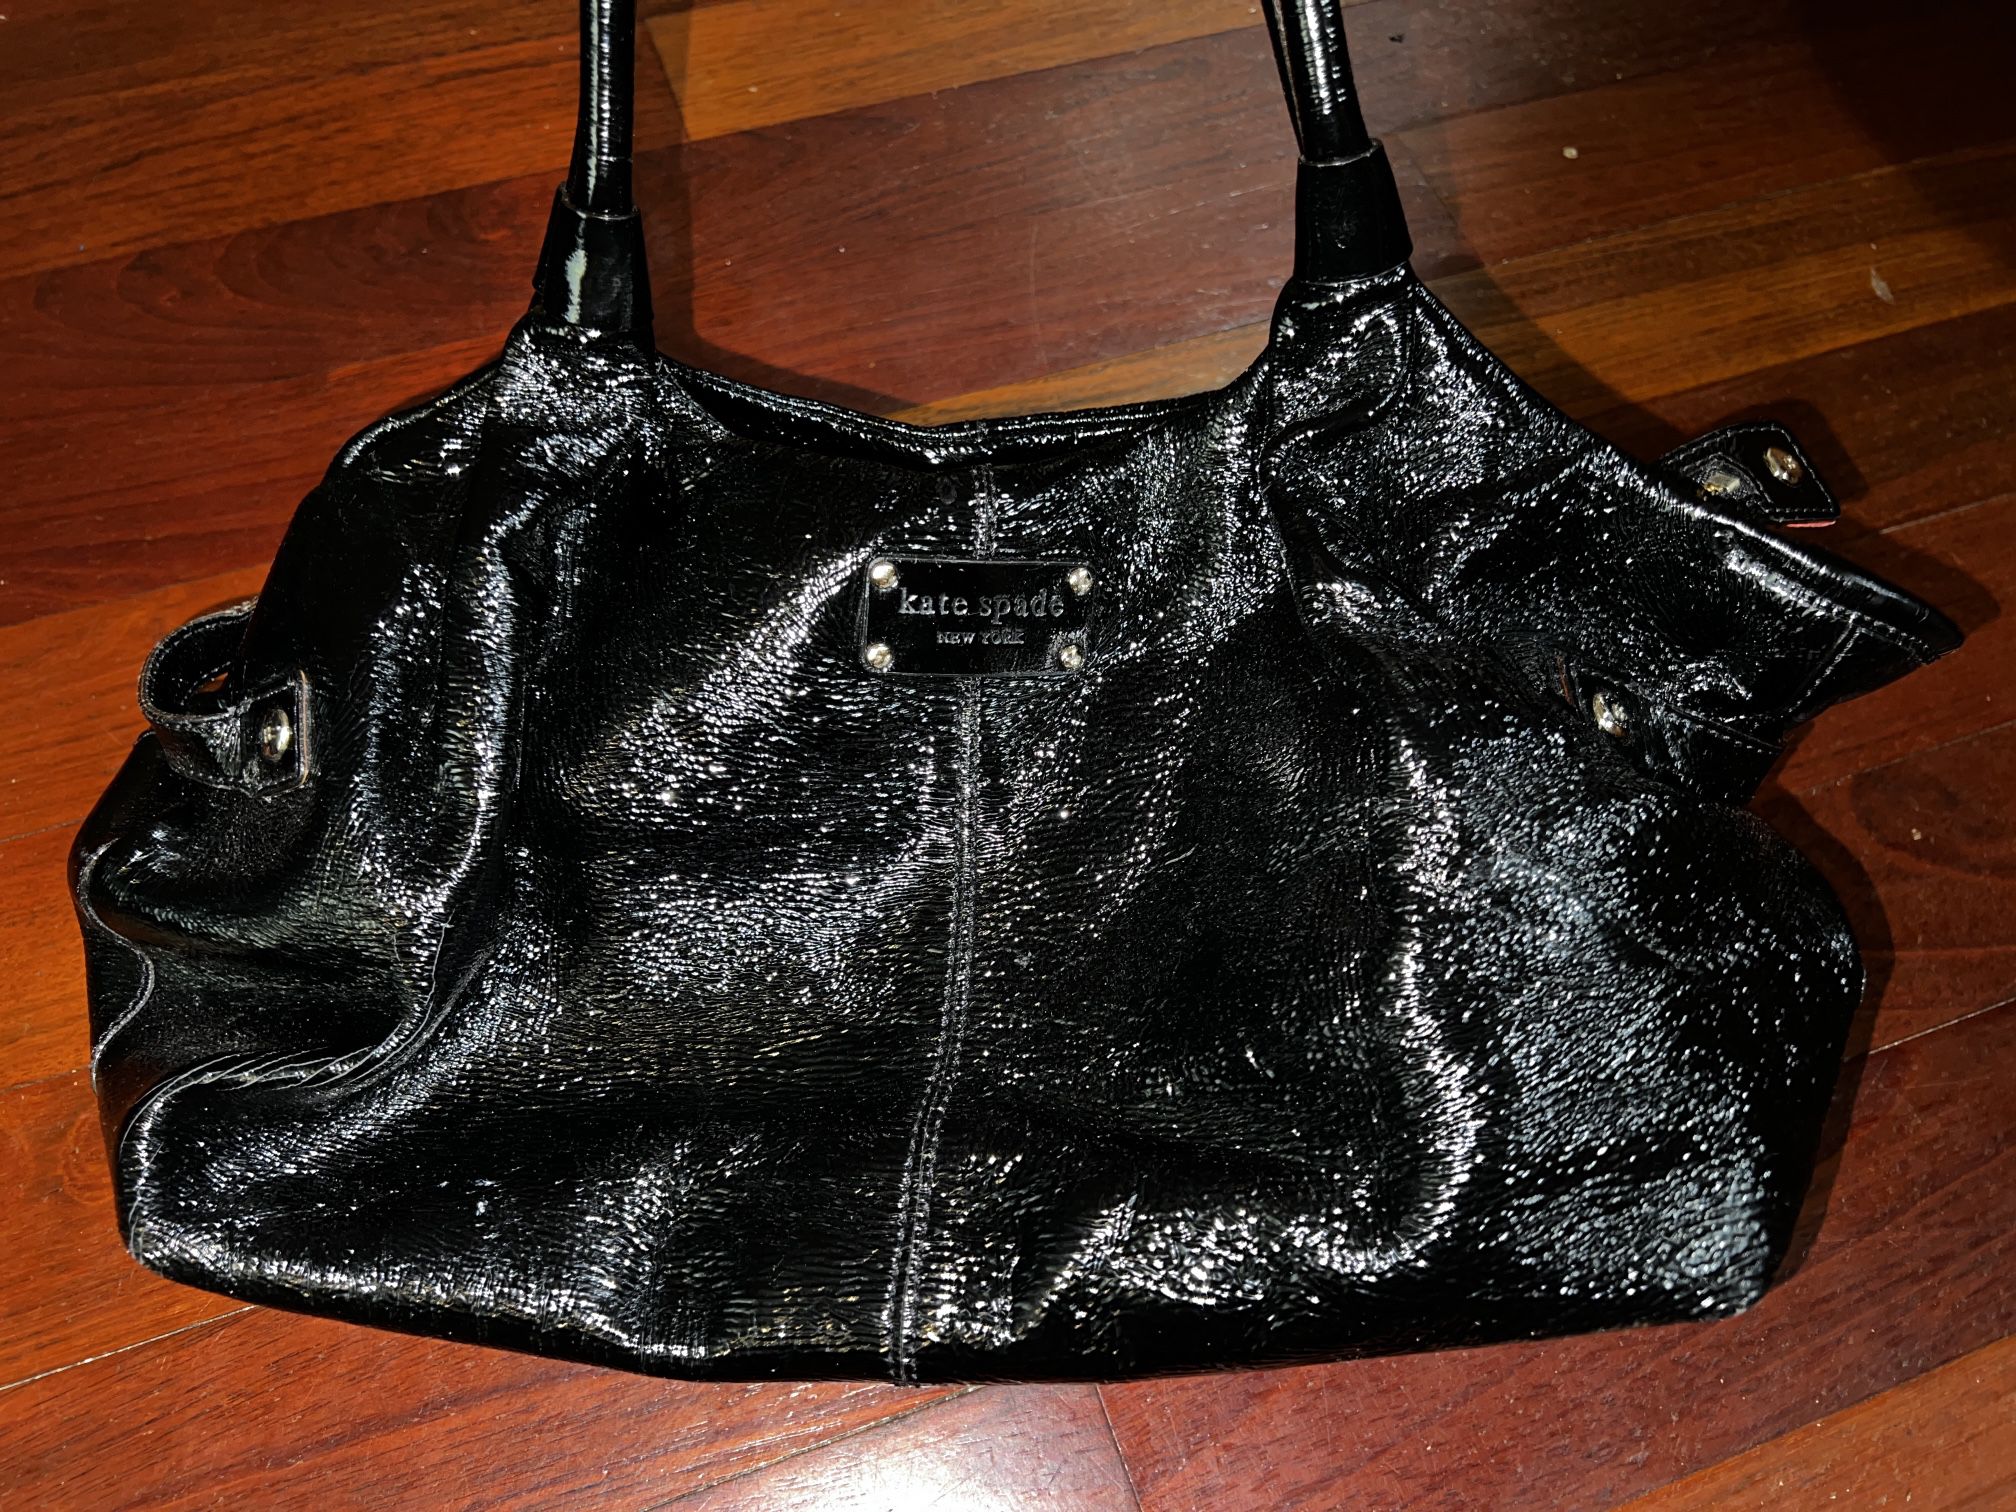 Kate Spade New York Satchel Black Patent Leather Bag